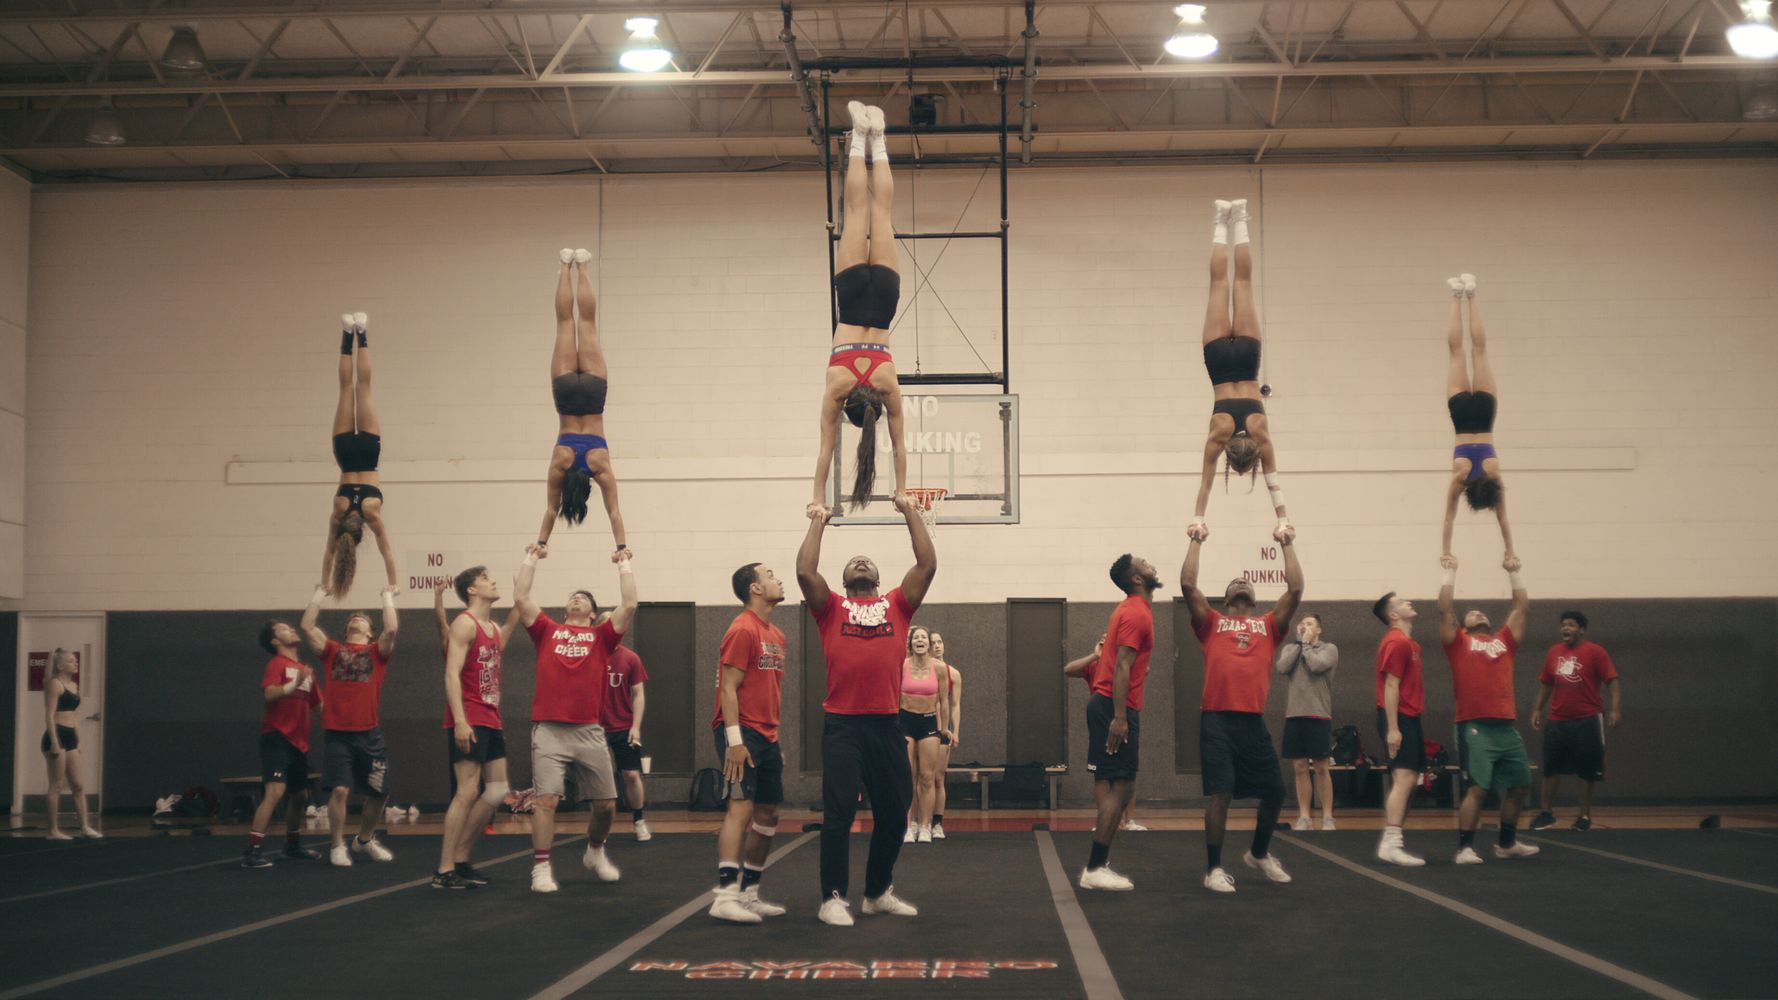 Cheerleading business seeks new building, Community Sports